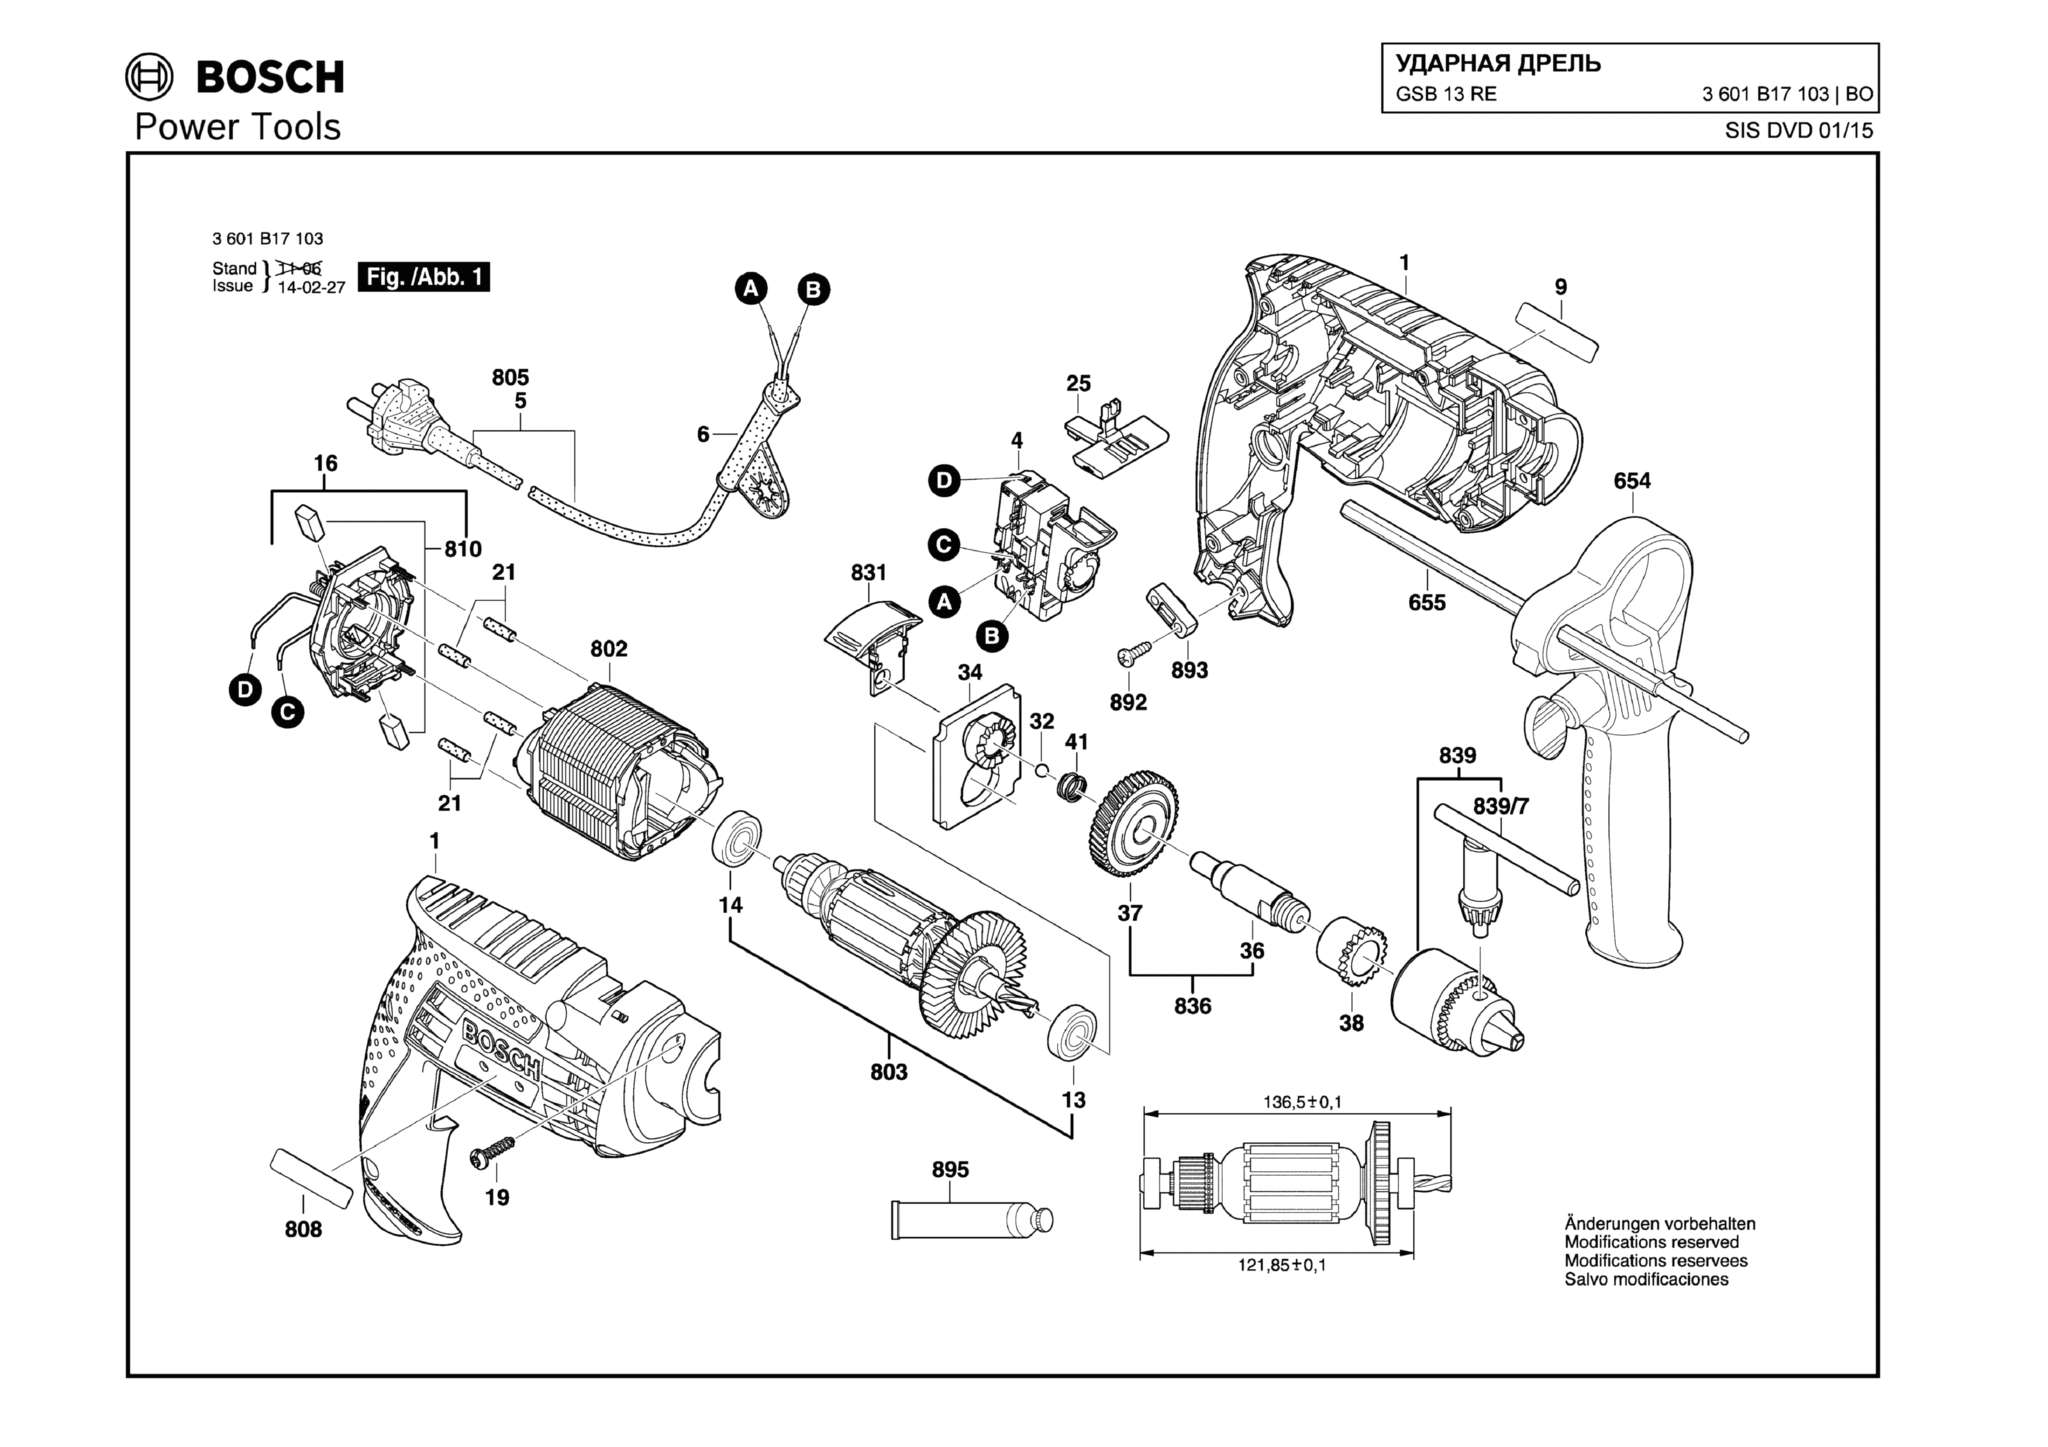 Запчасти, схема и деталировка Bosch GSB 13 RE (ТИП 3601B17103)